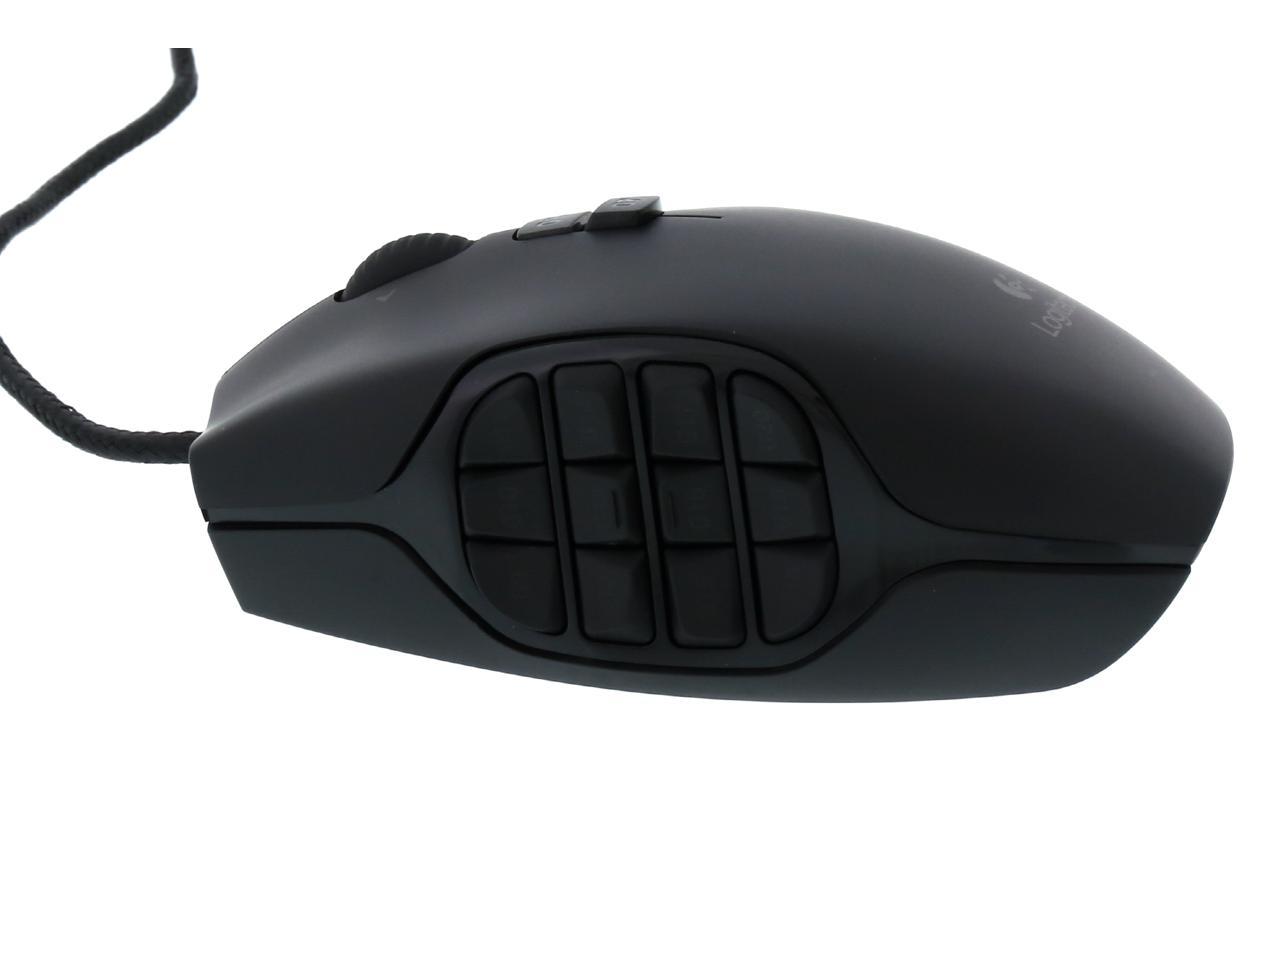 Maiden mundstykke Motivering Logitech G600 MMO Gaming Mouse, RGB Backlit, 20 Programmable Buttons -  Newegg.com